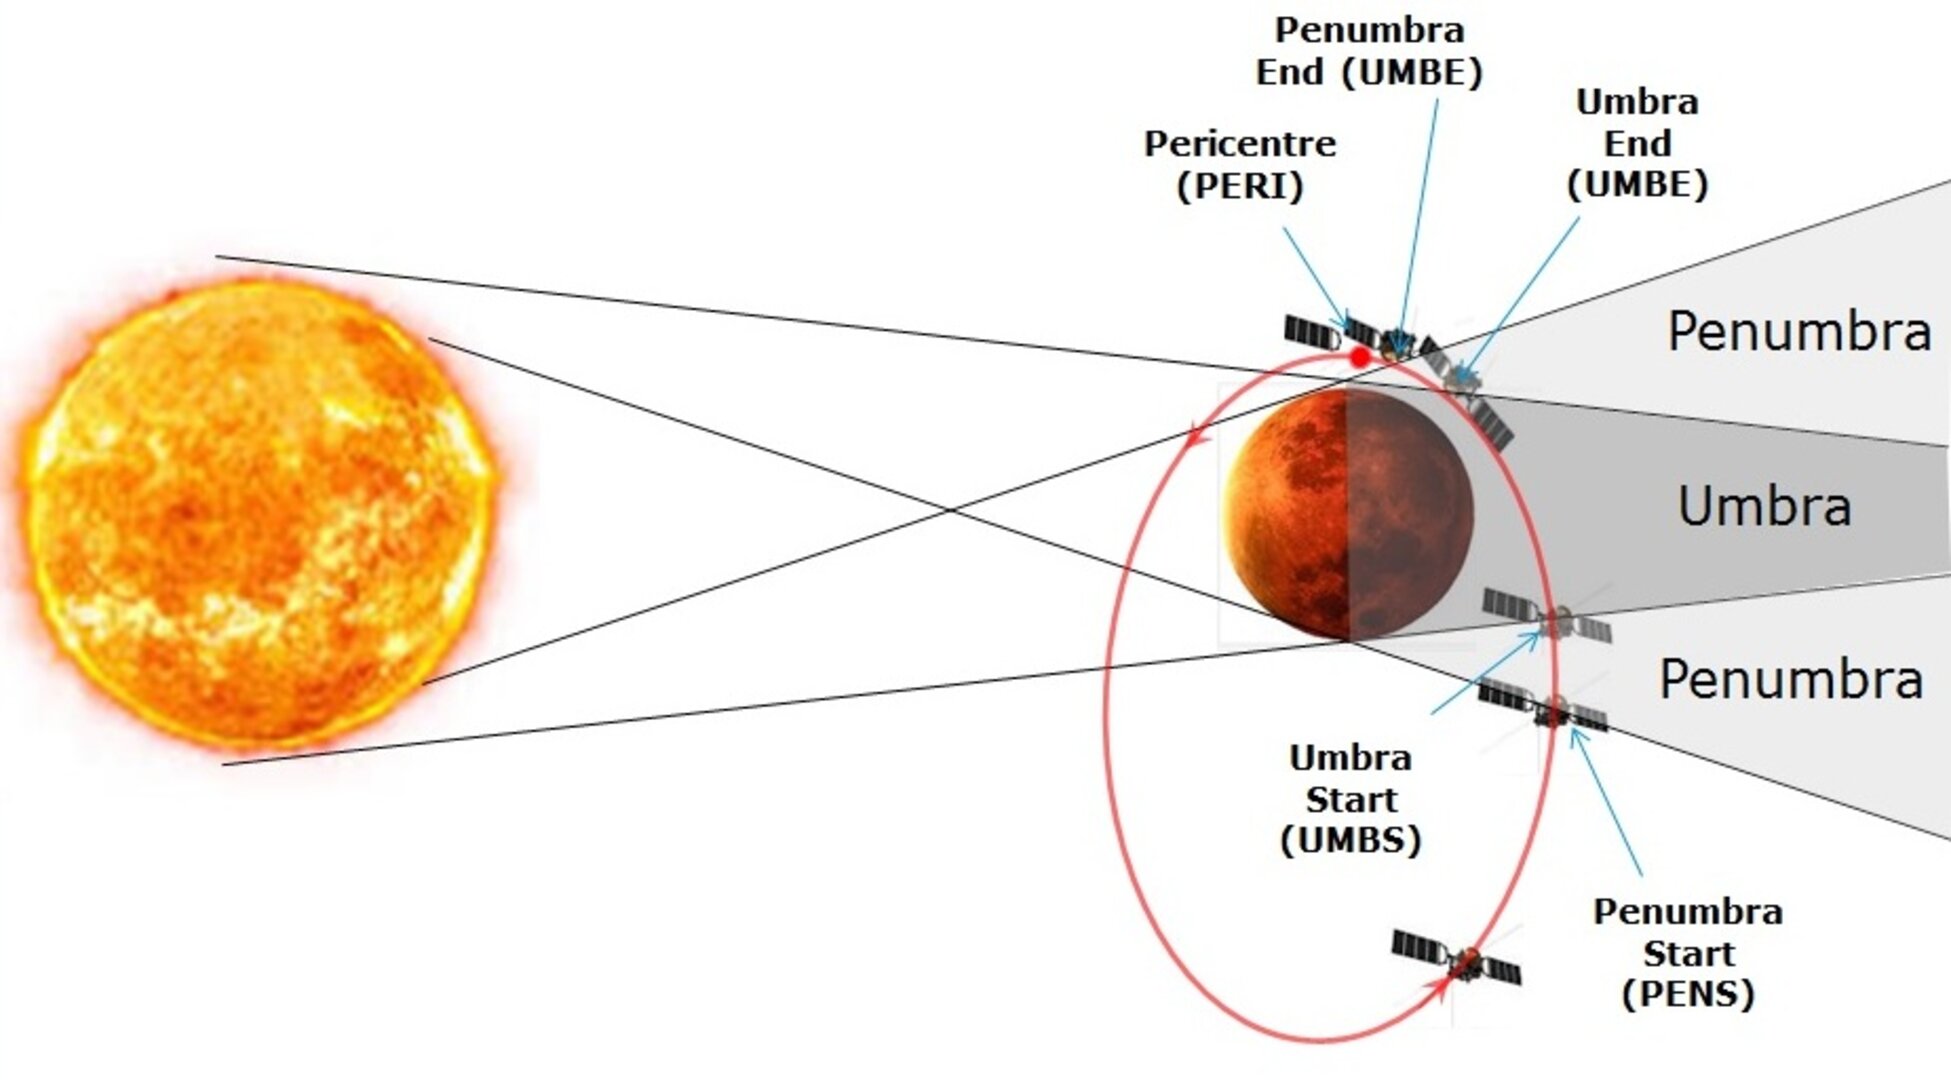 Eclipses in Mars orbit